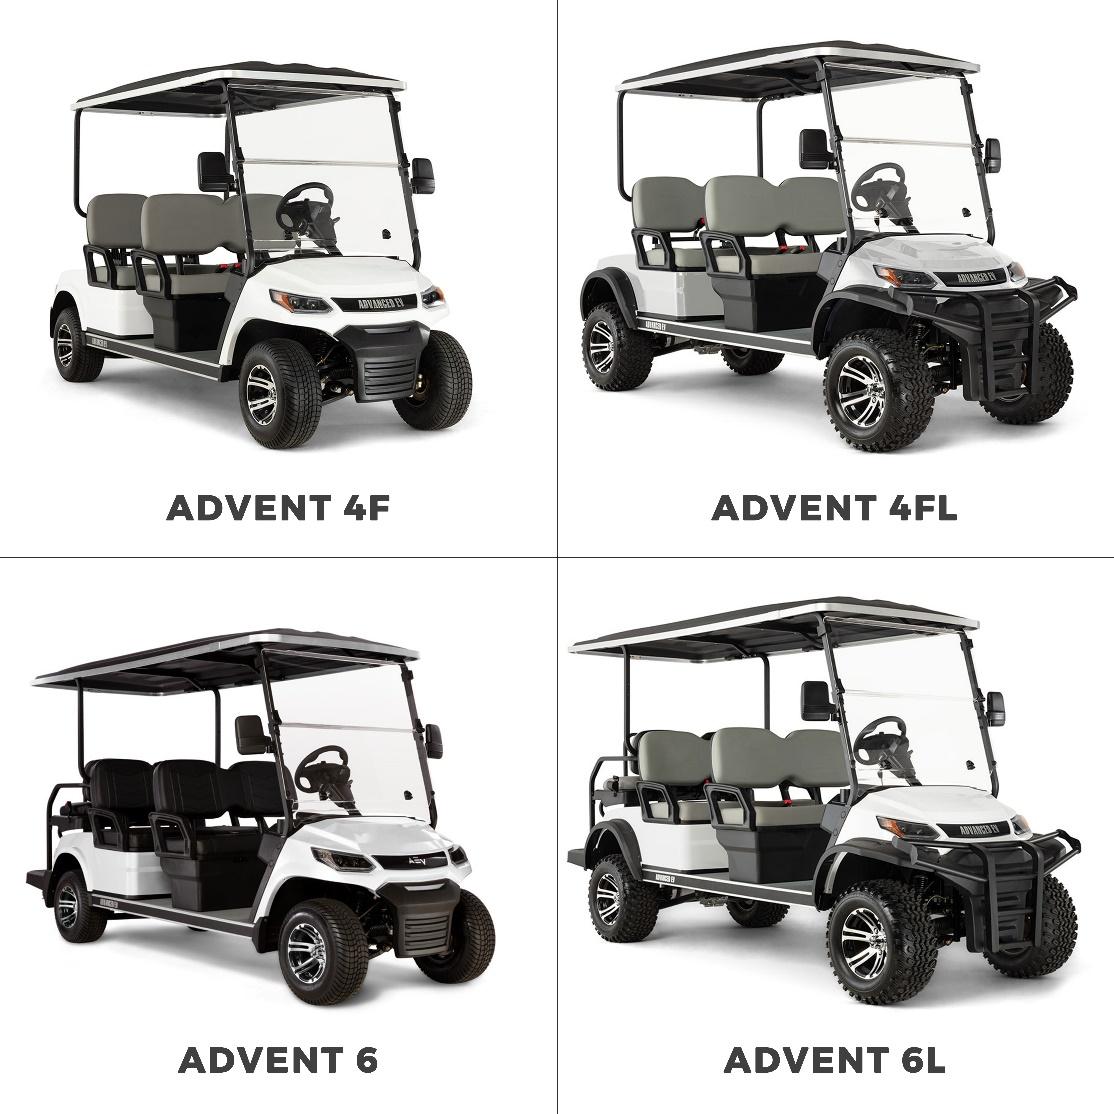 Advent 4F, Advent 4FL, Advent 6 and Advent 6L golf carts